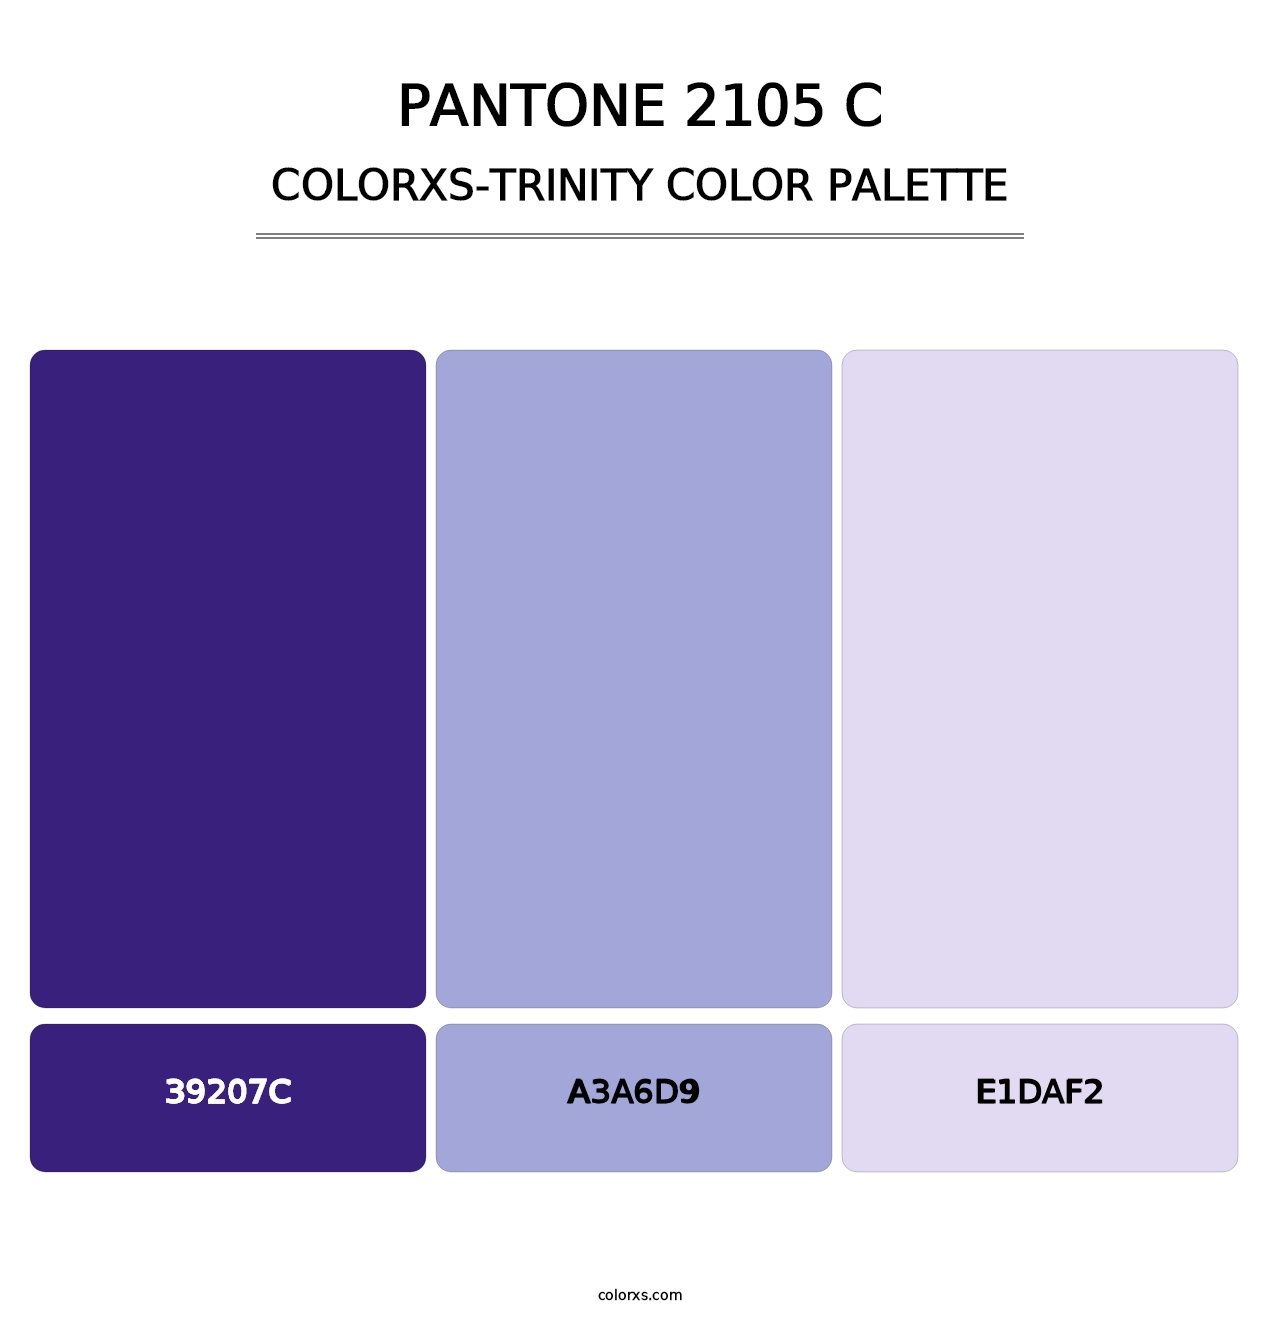 PANTONE 2105 C - Colorxs Trinity Palette